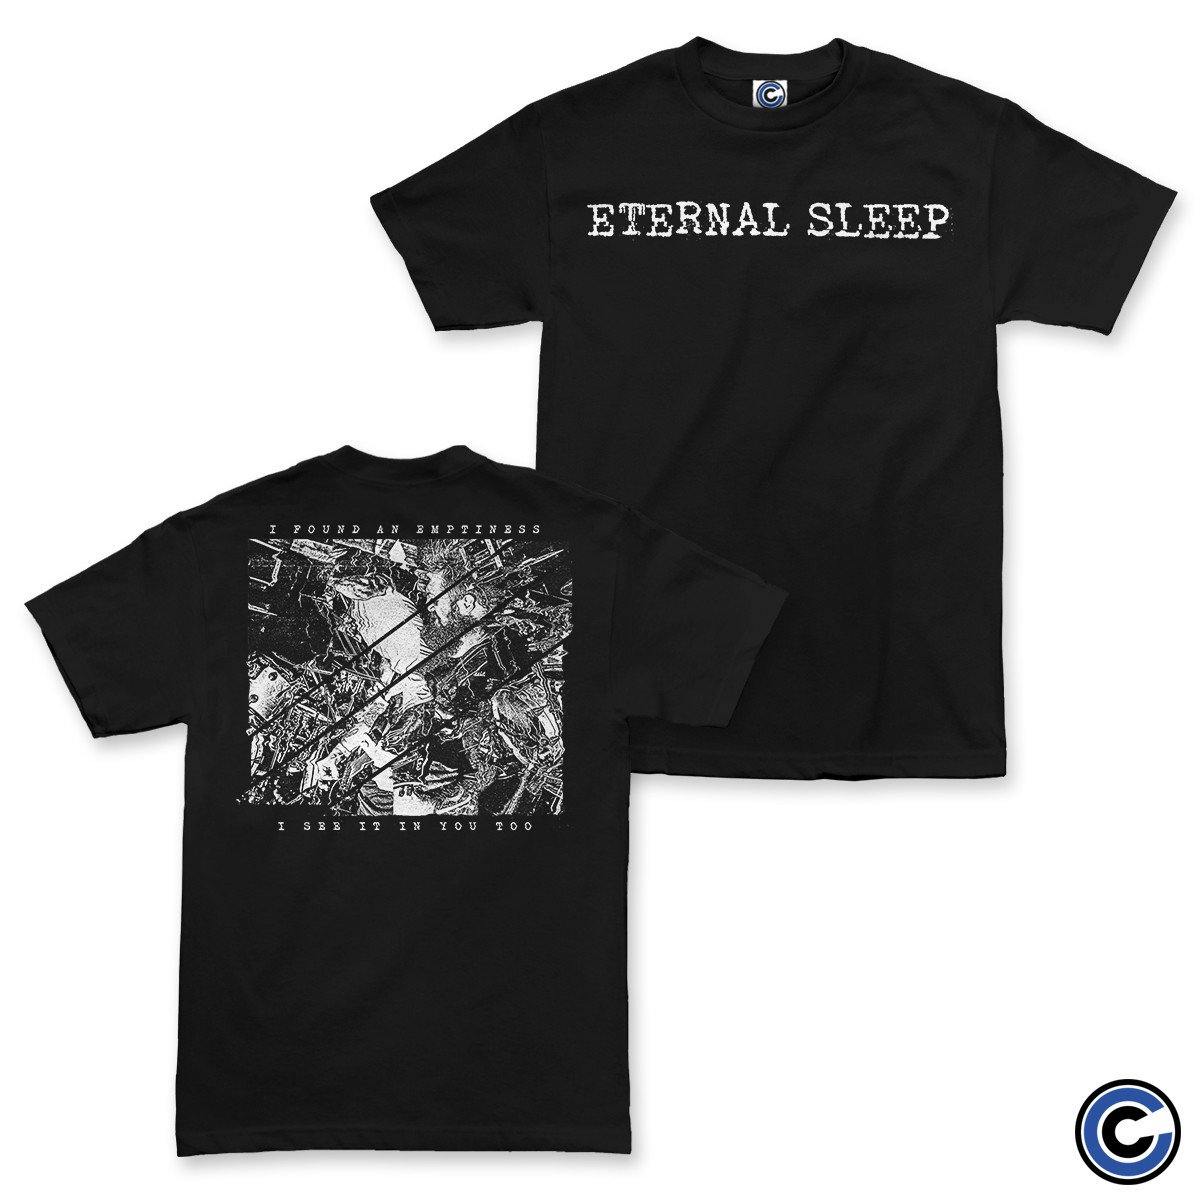 Buy – Eternal Sleep "Glitch" Shirt – Band & Music Merch – Cold Cuts Merch